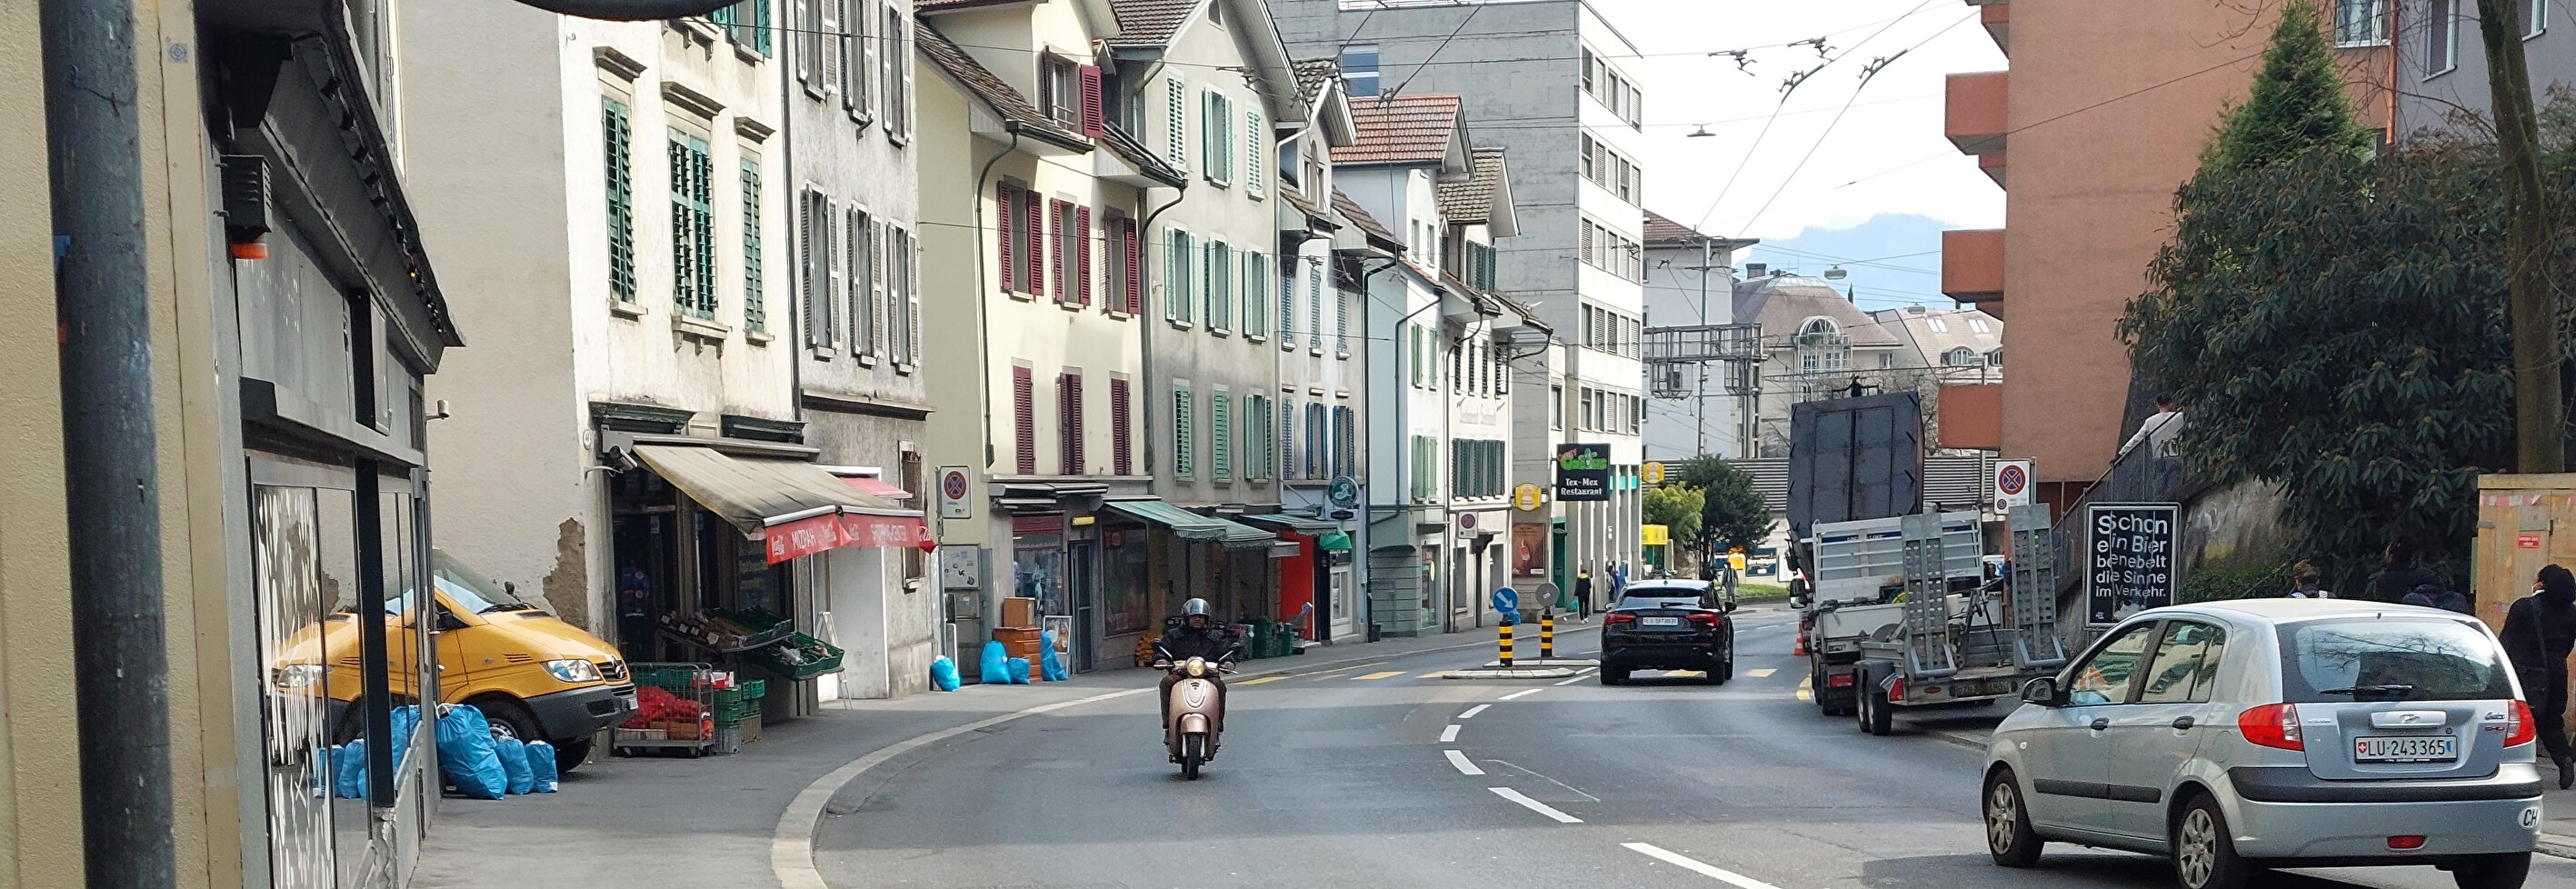 Baselstrasse